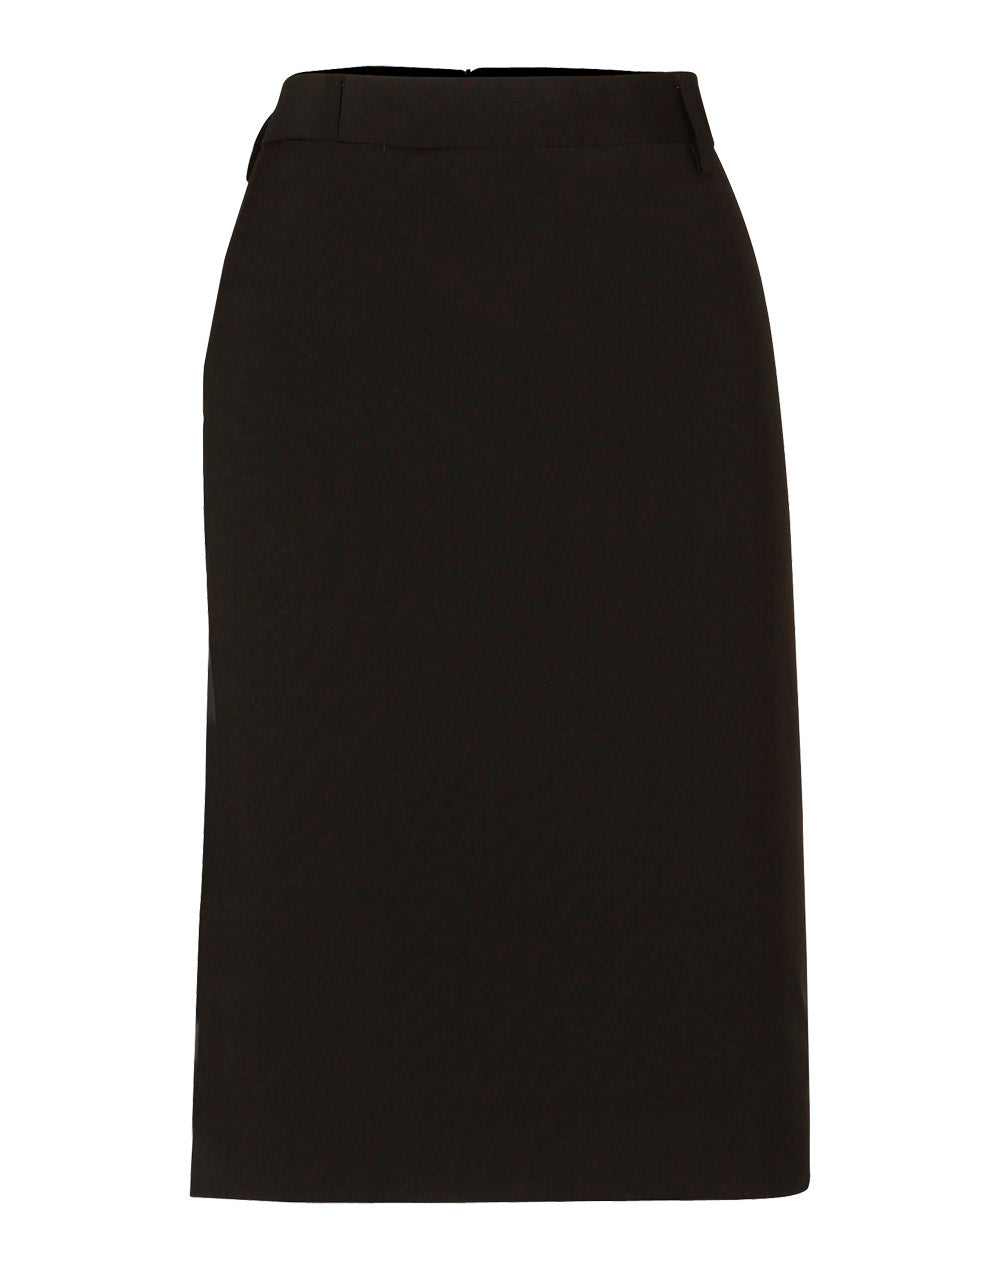 JCM9470 Women's Wool Blend Stretch Mid Length Lined Pencil Skirt